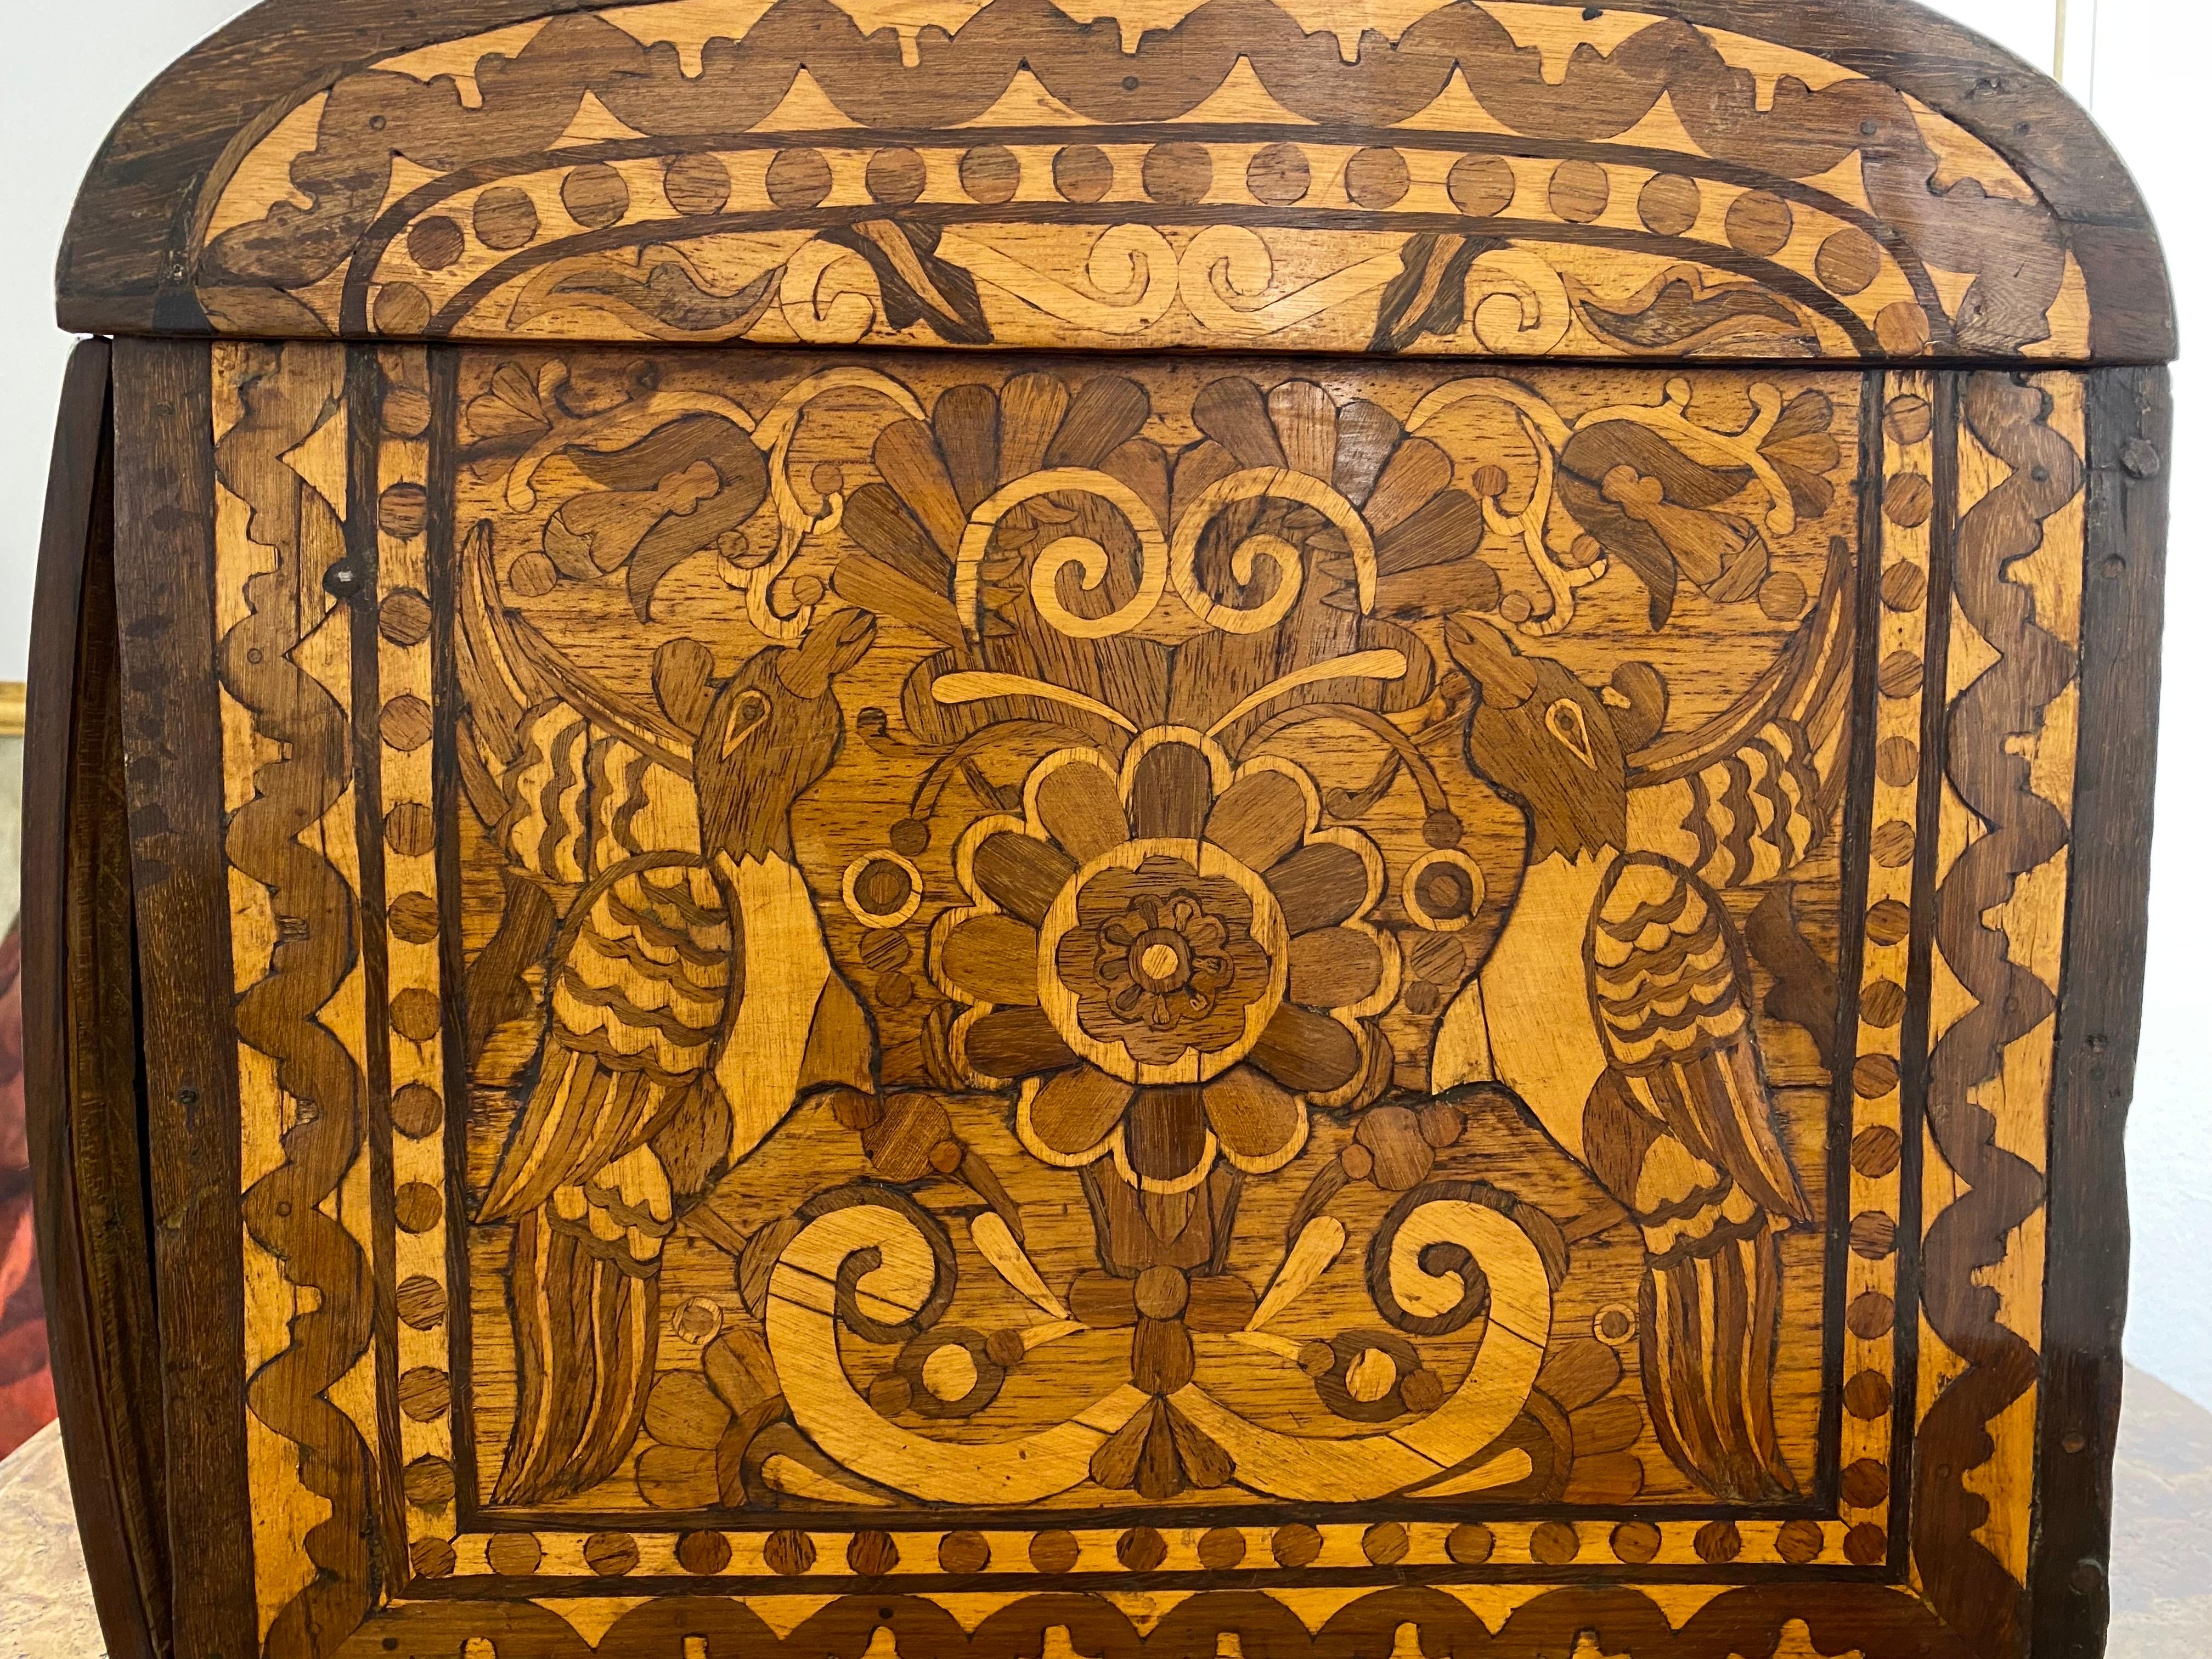 Mexican Marquetry casket.
Oaxaca 17 century.